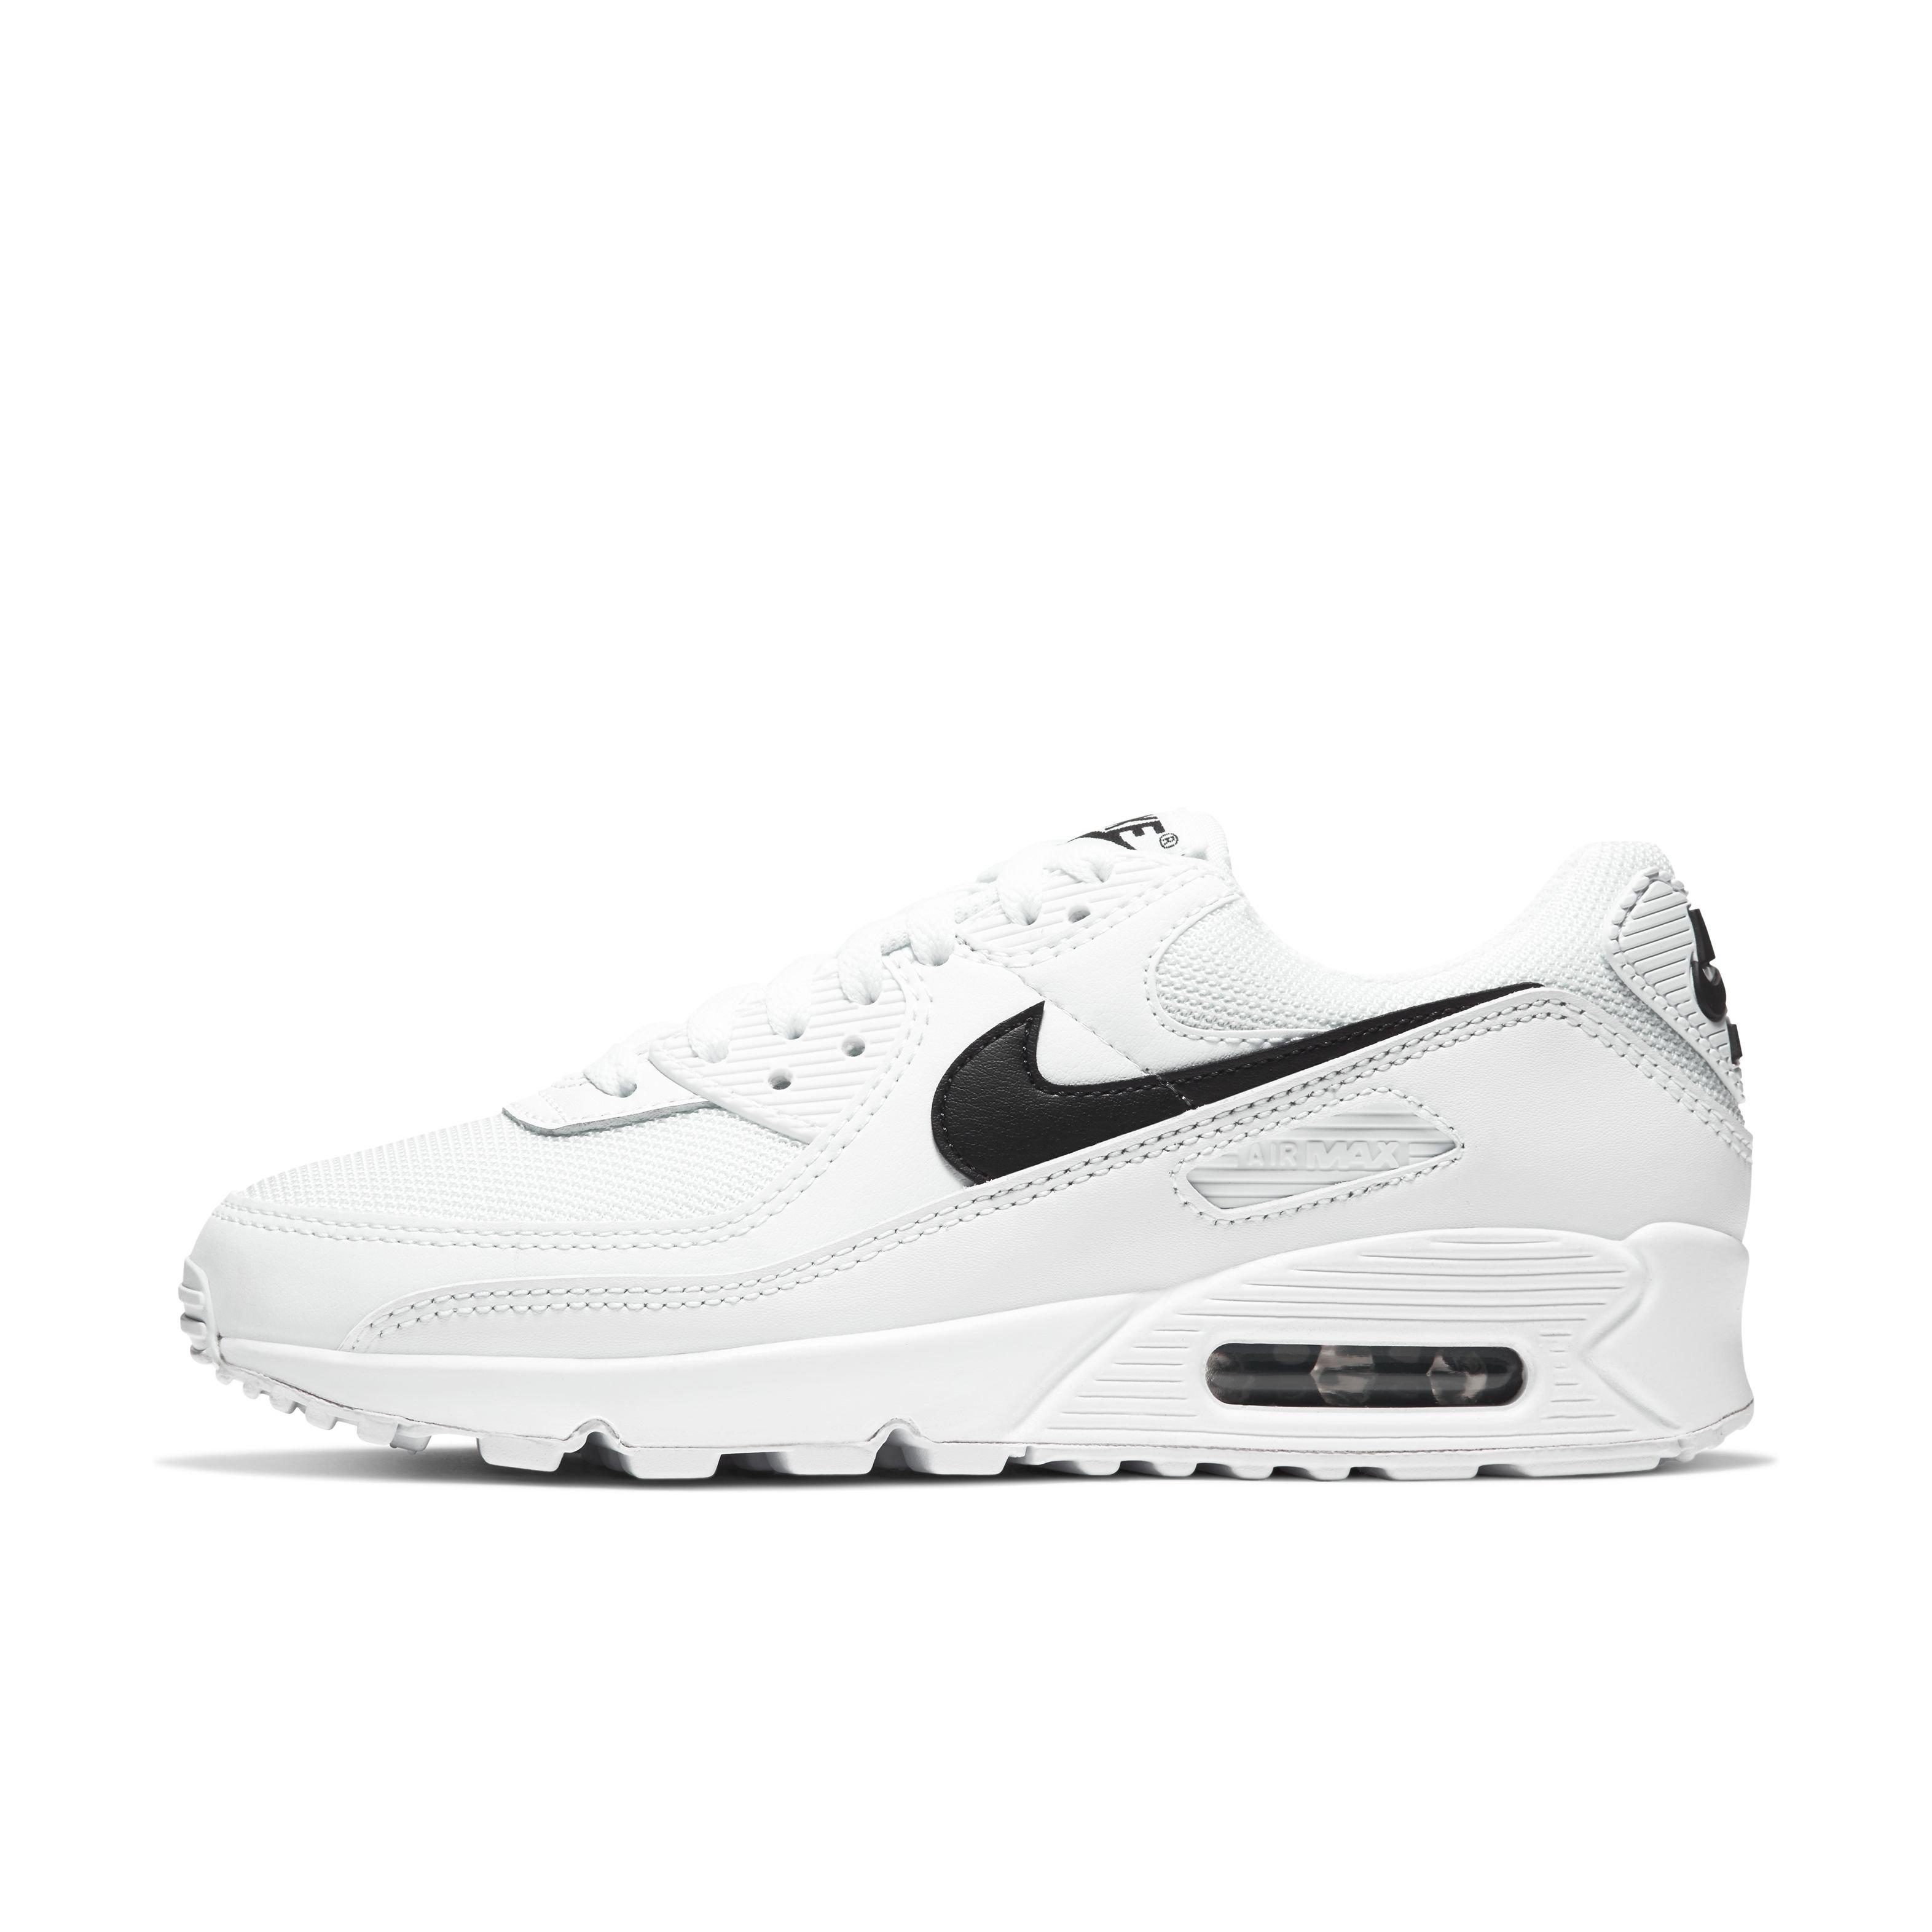 autoridad préstamo boxeo Nike Air Max 90 "White/Black" Women's Shoe